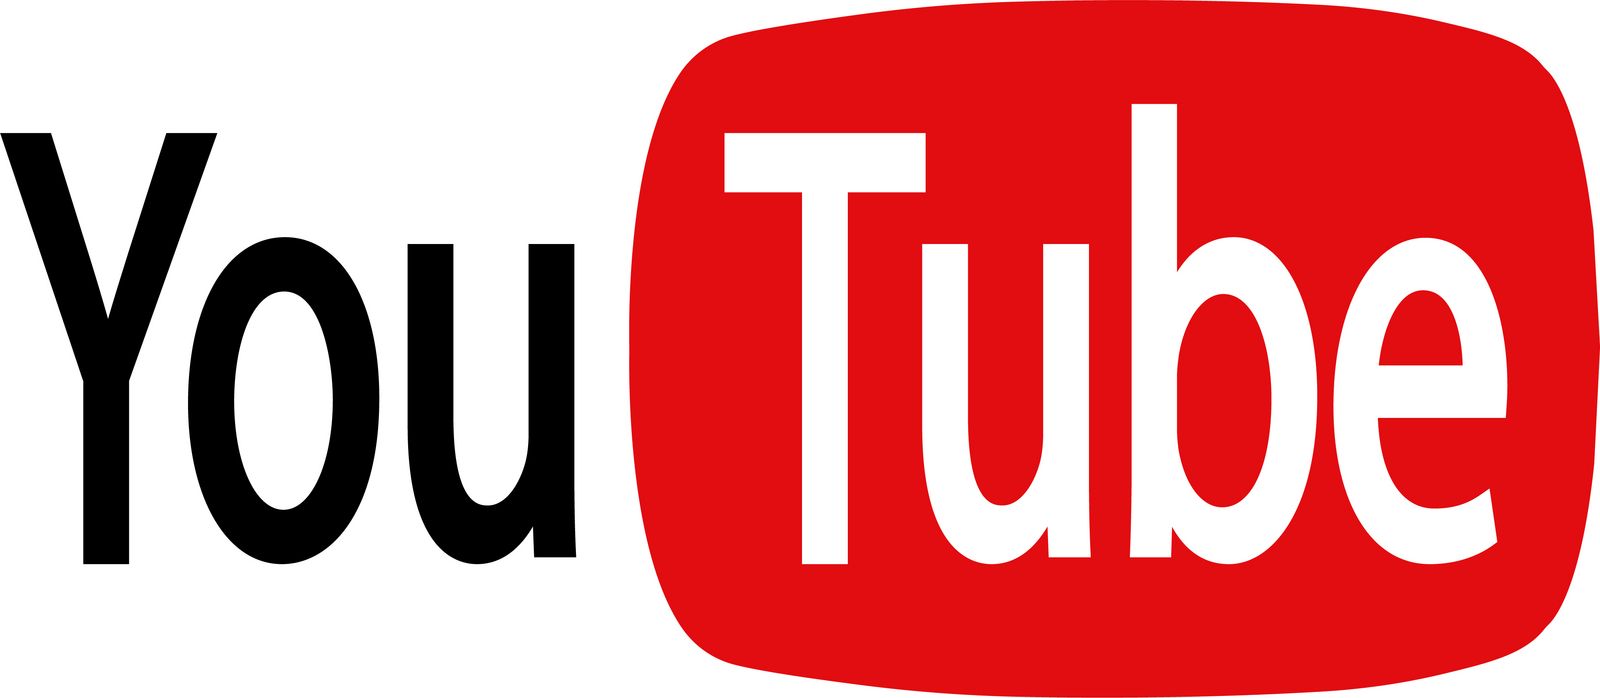 YouTube videos